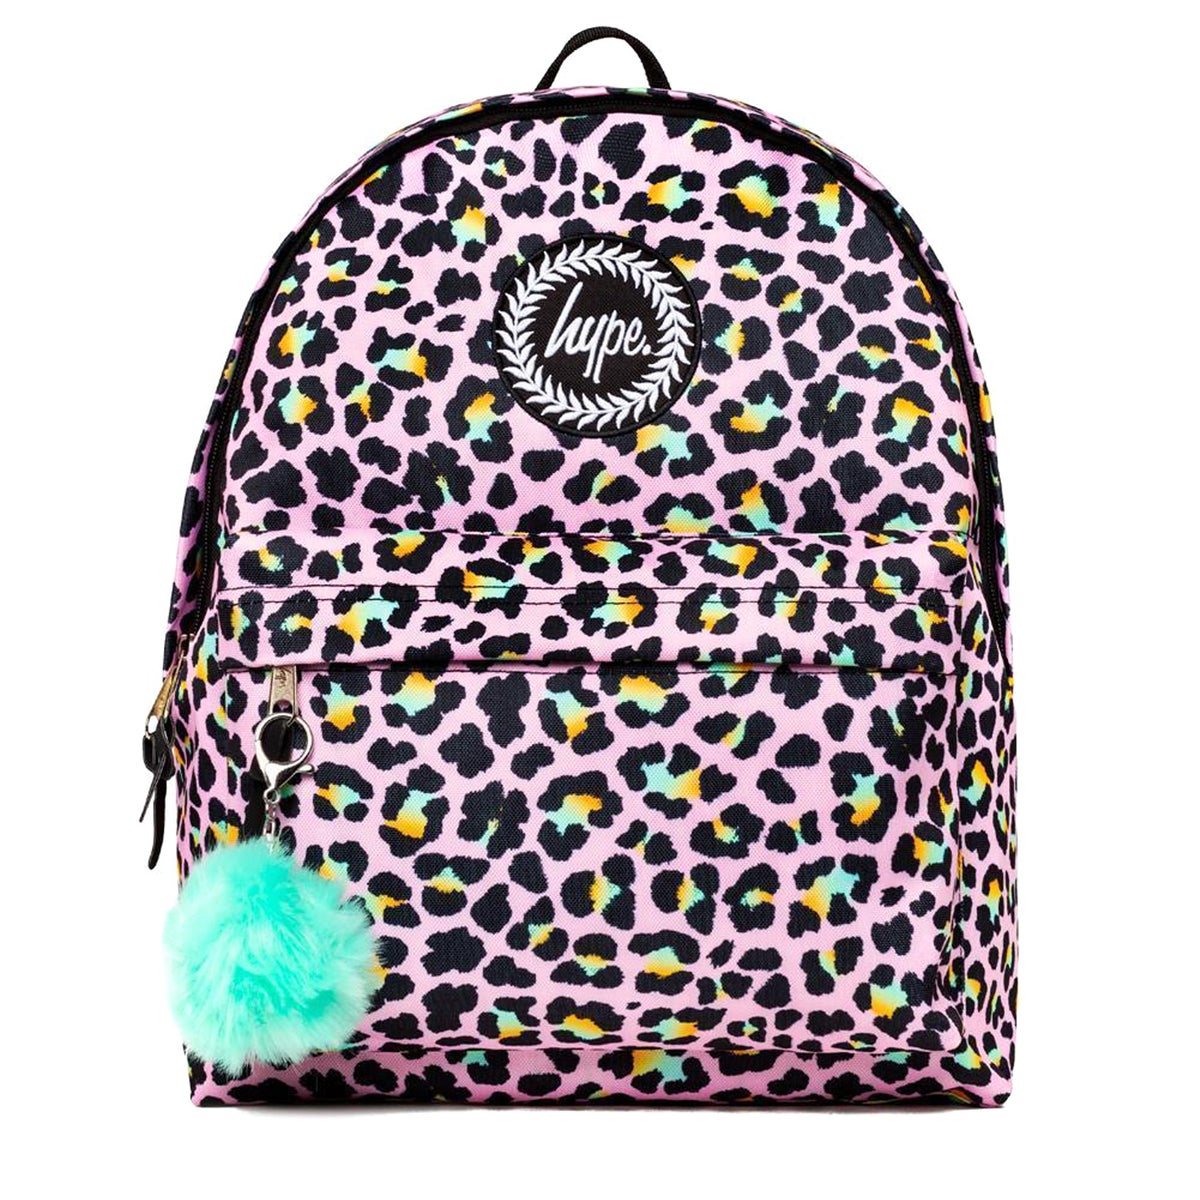 The Best 10 Backpacks For Heading Back To School Journal